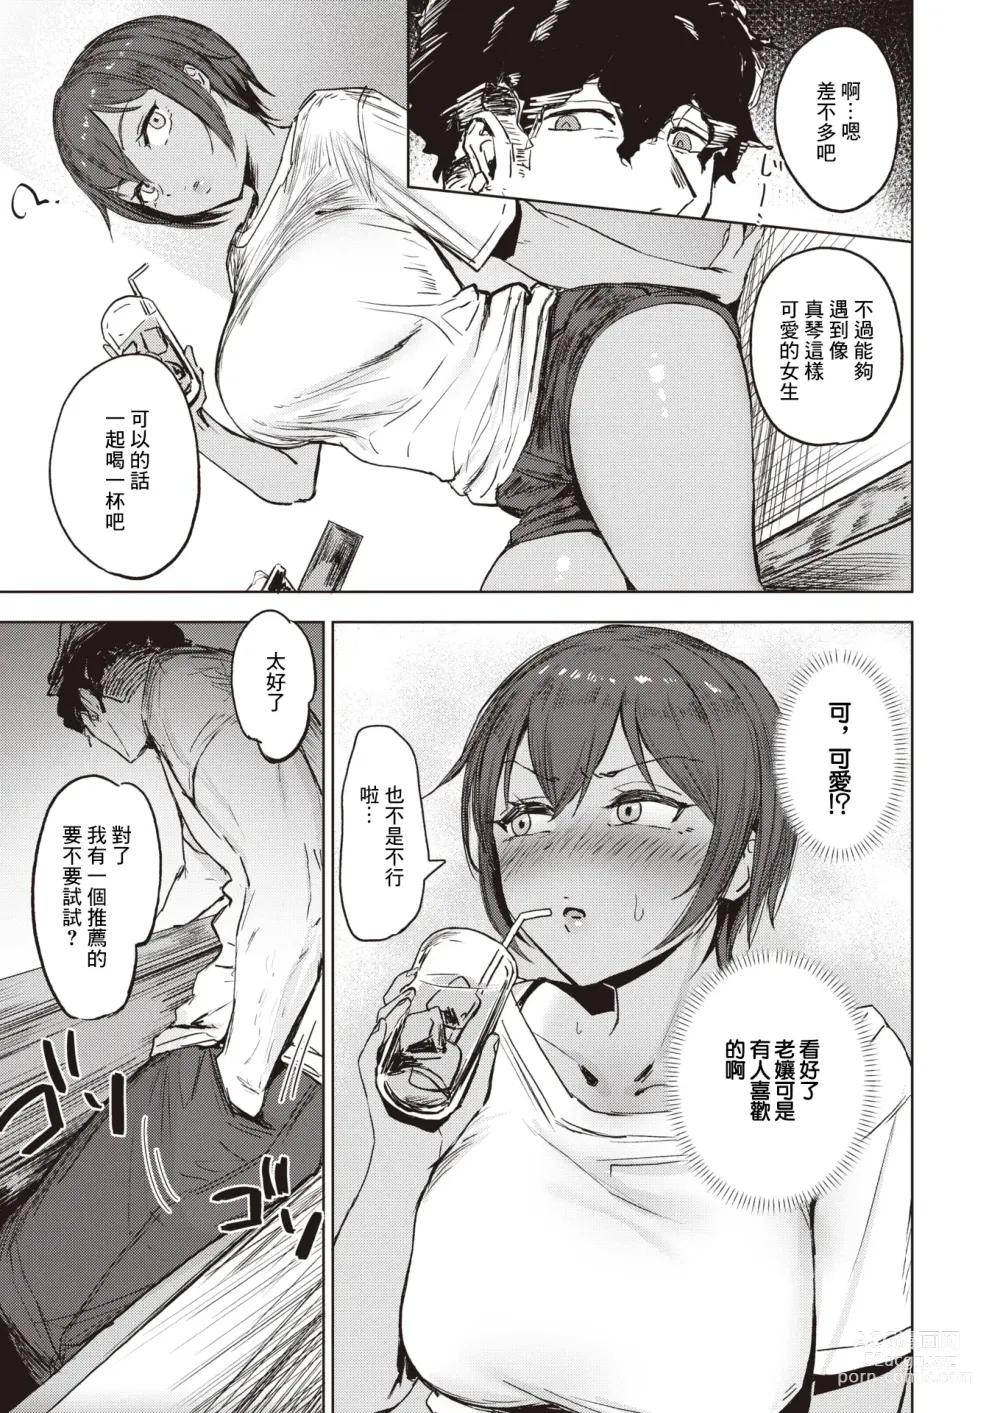 Page 6 of manga Kimochii  Koto  ni wa Sakaraenai - musclehead girl cant resist orgasm